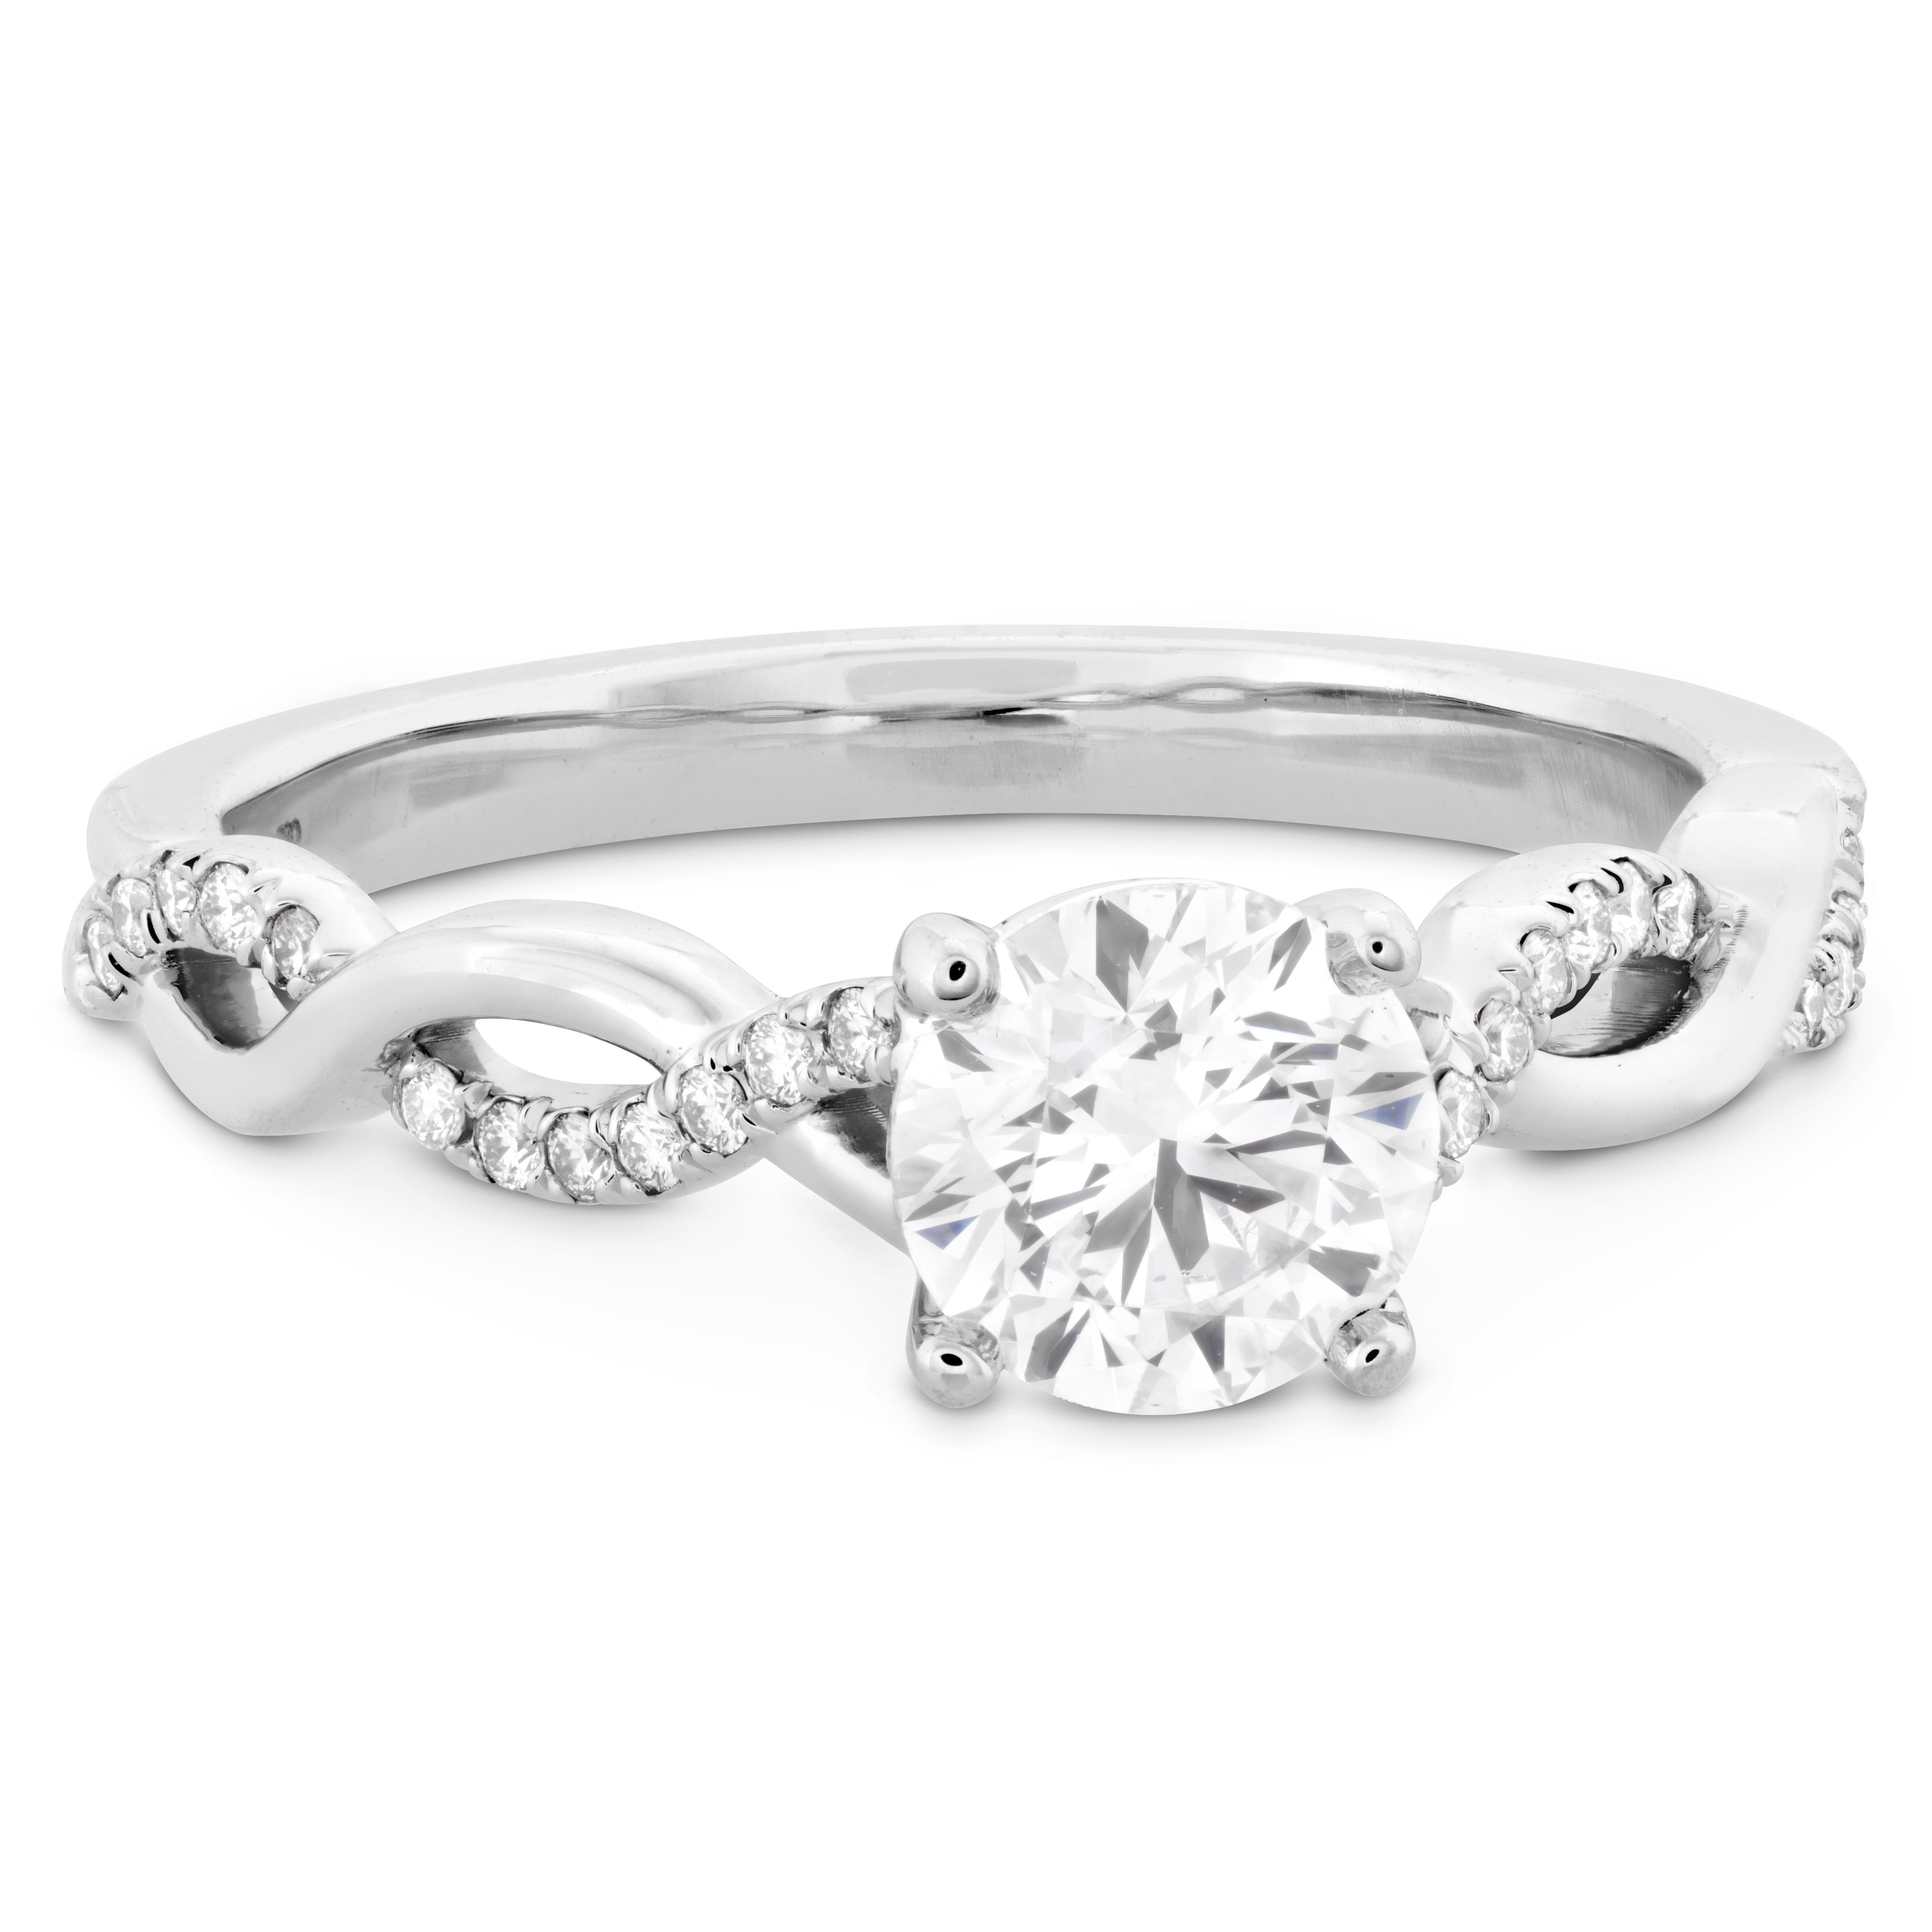 https://www.arthursjewelers.com/content/images/thumbs/Original/Destiny Lace HOF Ring_2-19362220.jpg